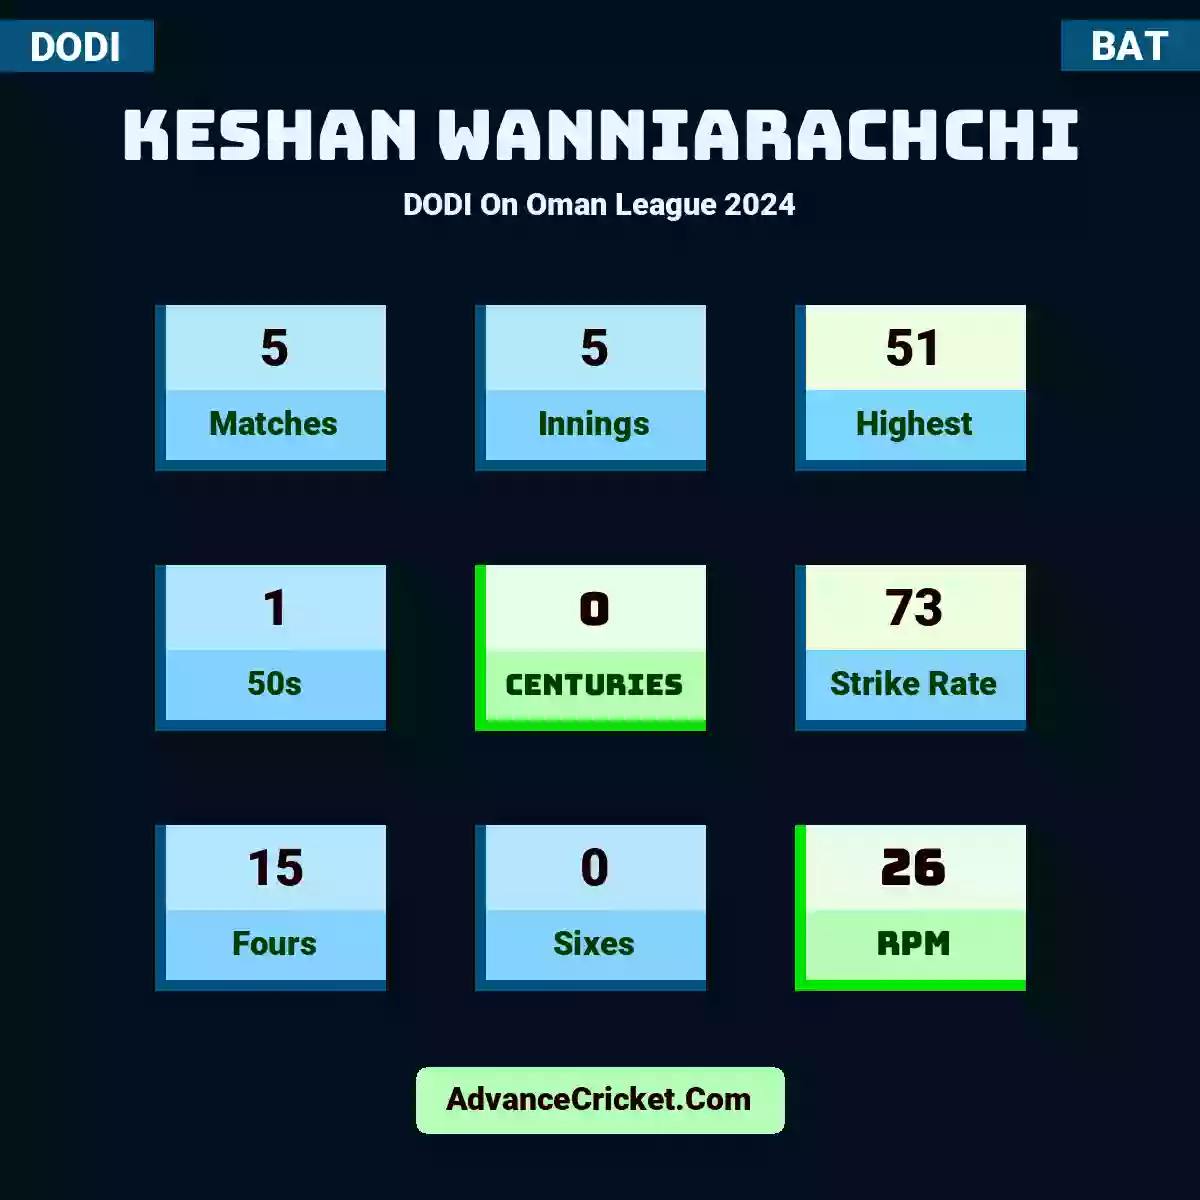 Keshan Wanniarachchi DODI  On Oman League 2024, Keshan Wanniarachchi played 5 matches, scored 51 runs as highest, 1 half-centuries, and 0 centuries, with a strike rate of 73. K.Wanniarachchi hit 15 fours and 0 sixes, with an RPM of 26.